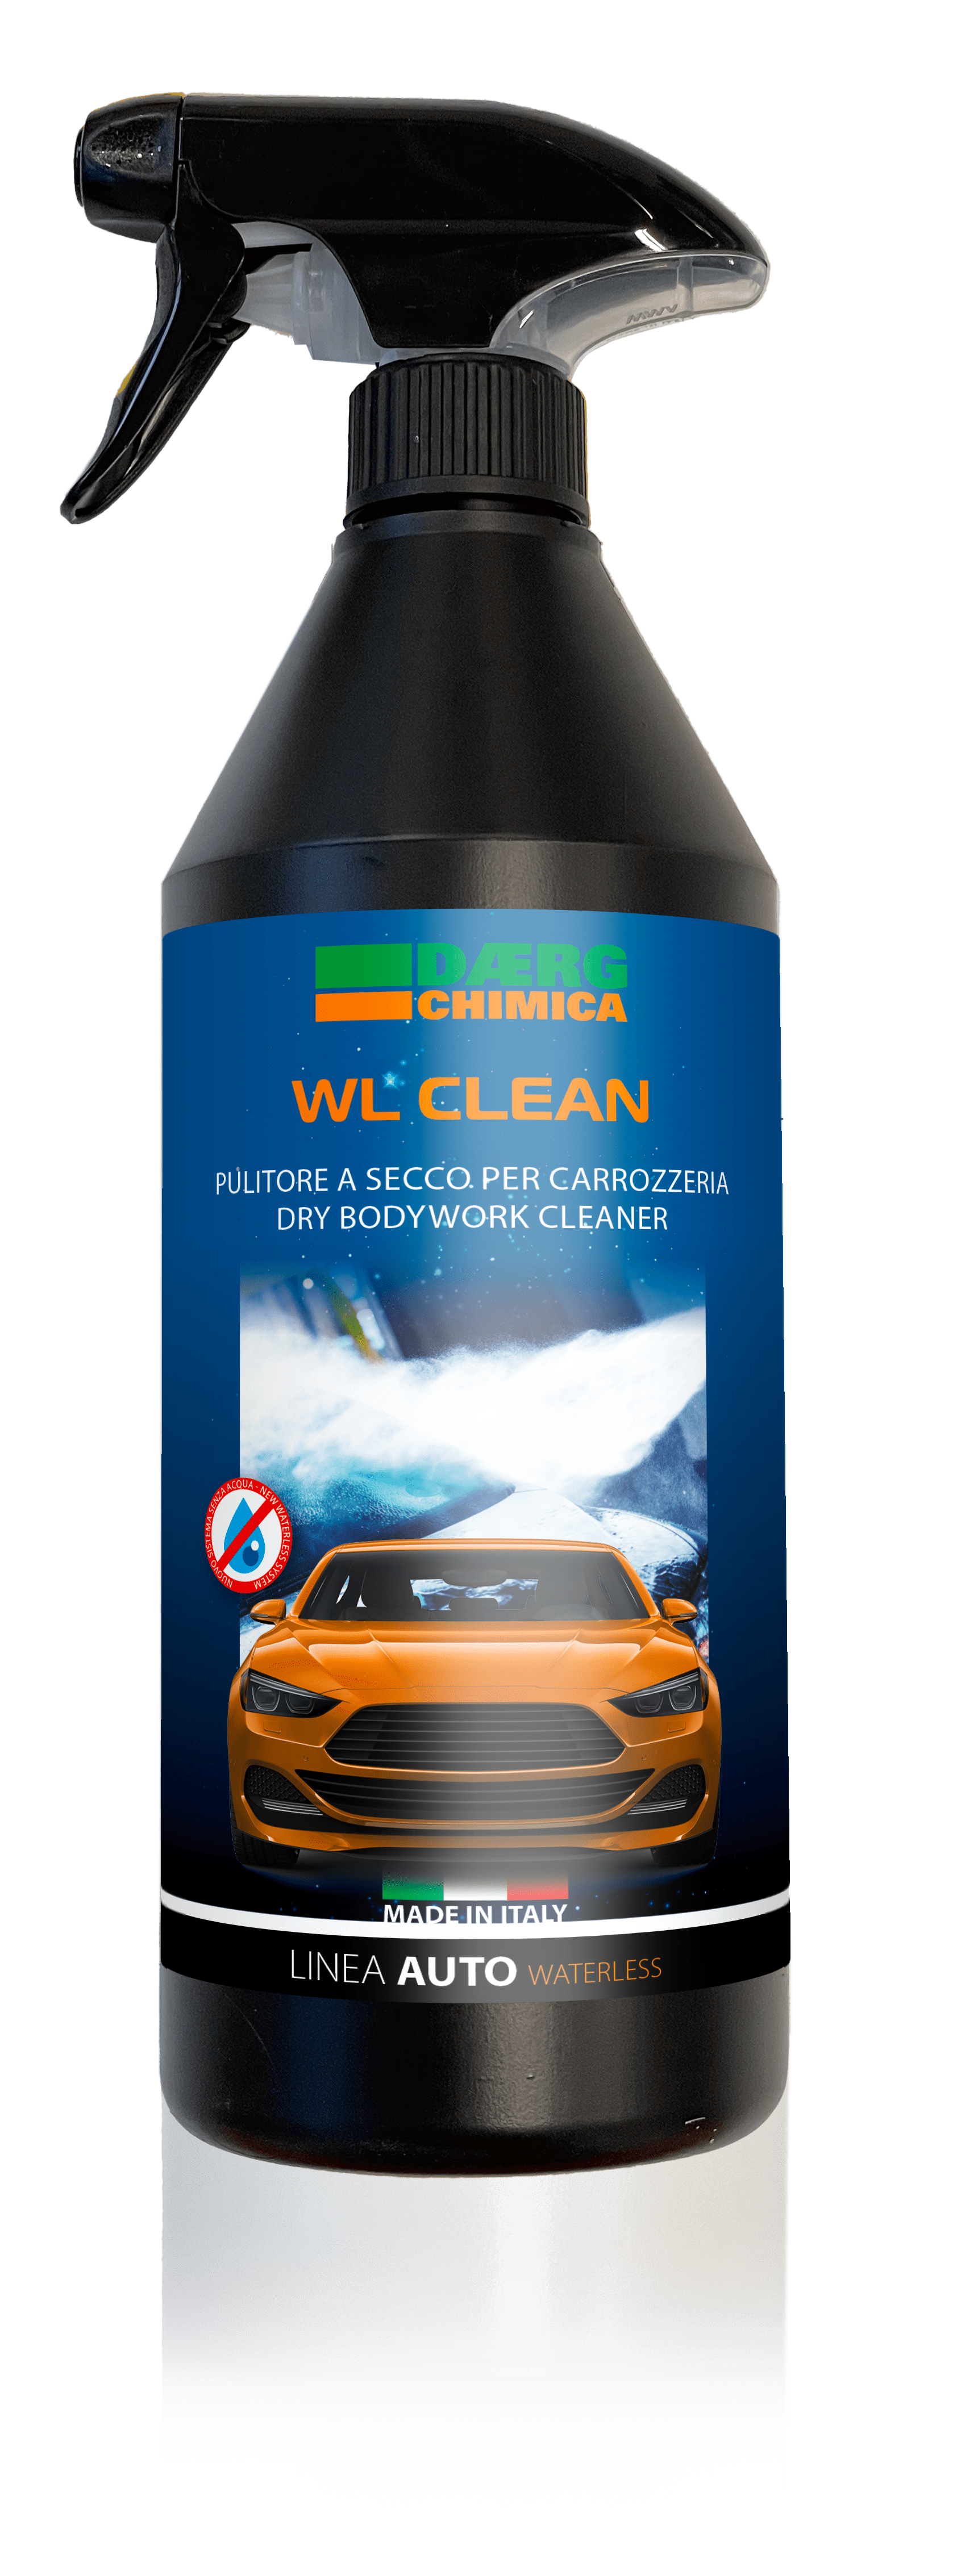 wl-clean-daerg-chimica